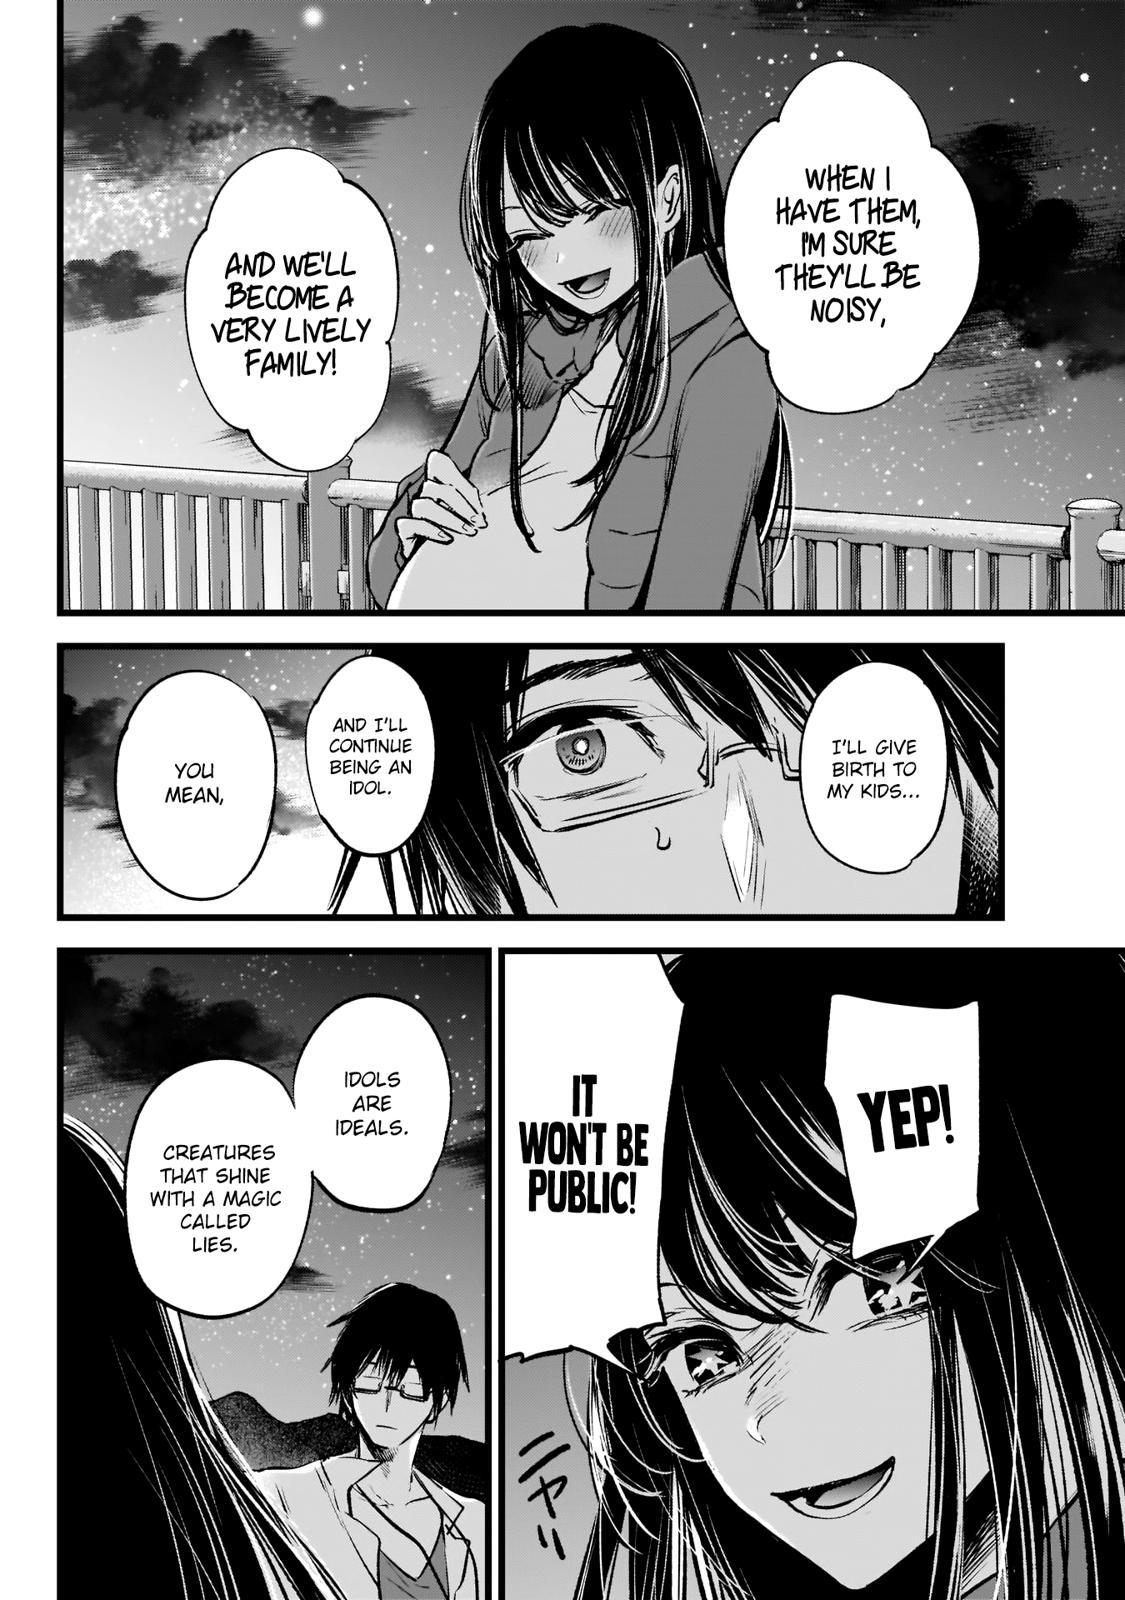 Oshi No Ko Manga Manga Chapter - 1 - image 26